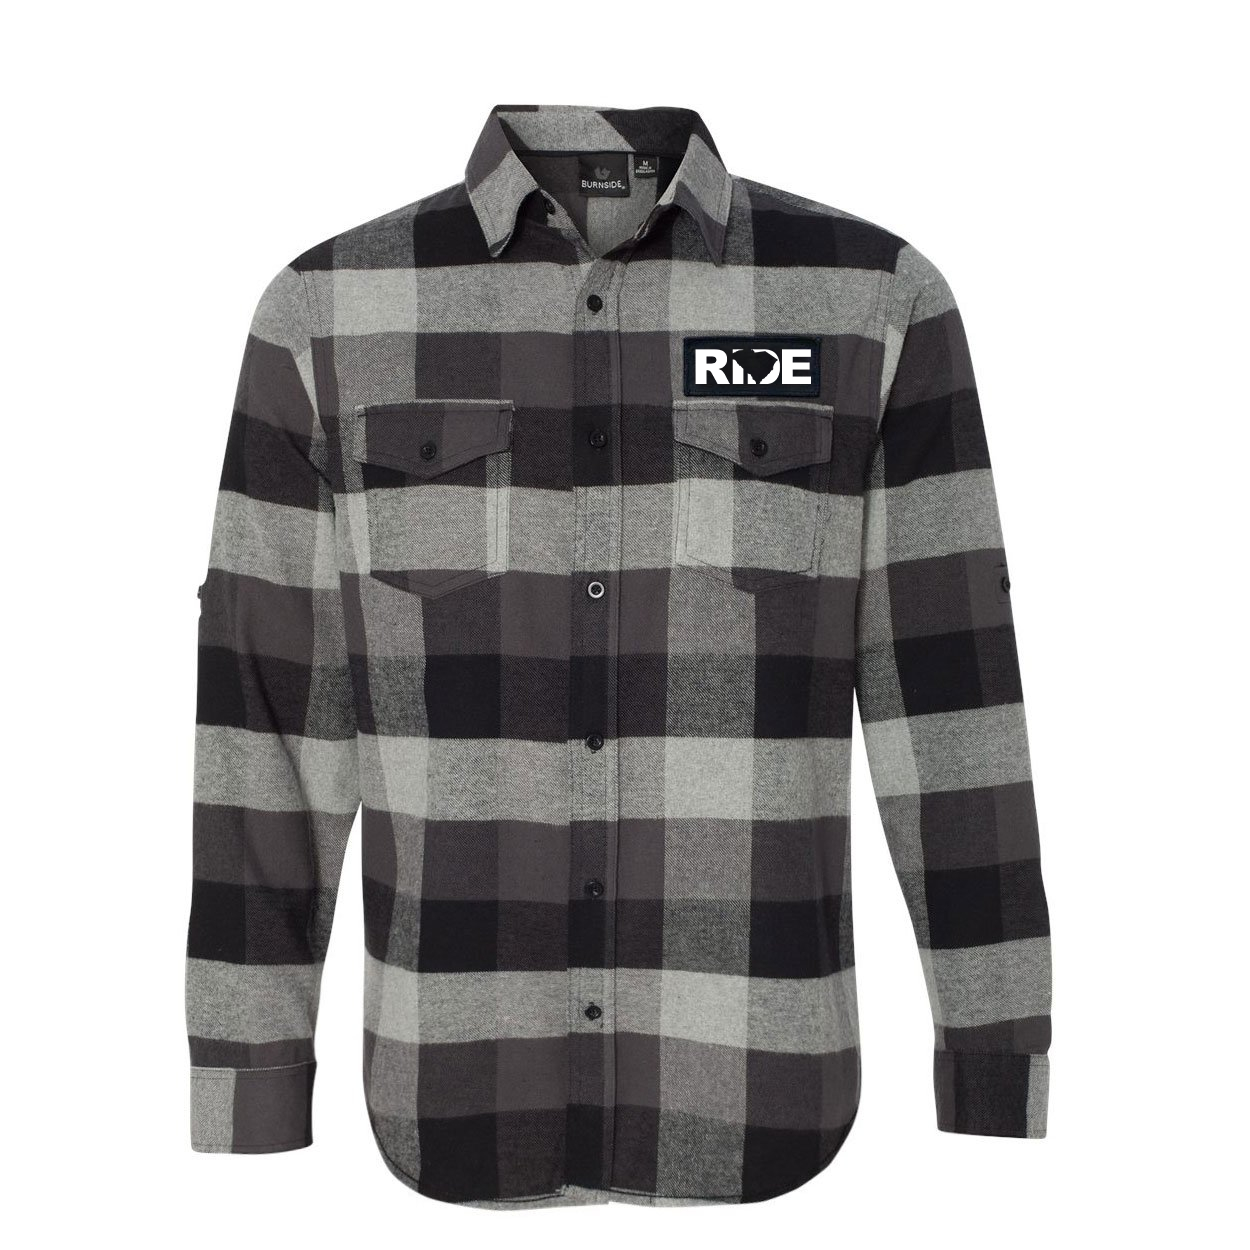 Ride South Carolina Classic Unisex Long Sleeve Woven Patch Flannel Shirt Black/Gray (White Logo)